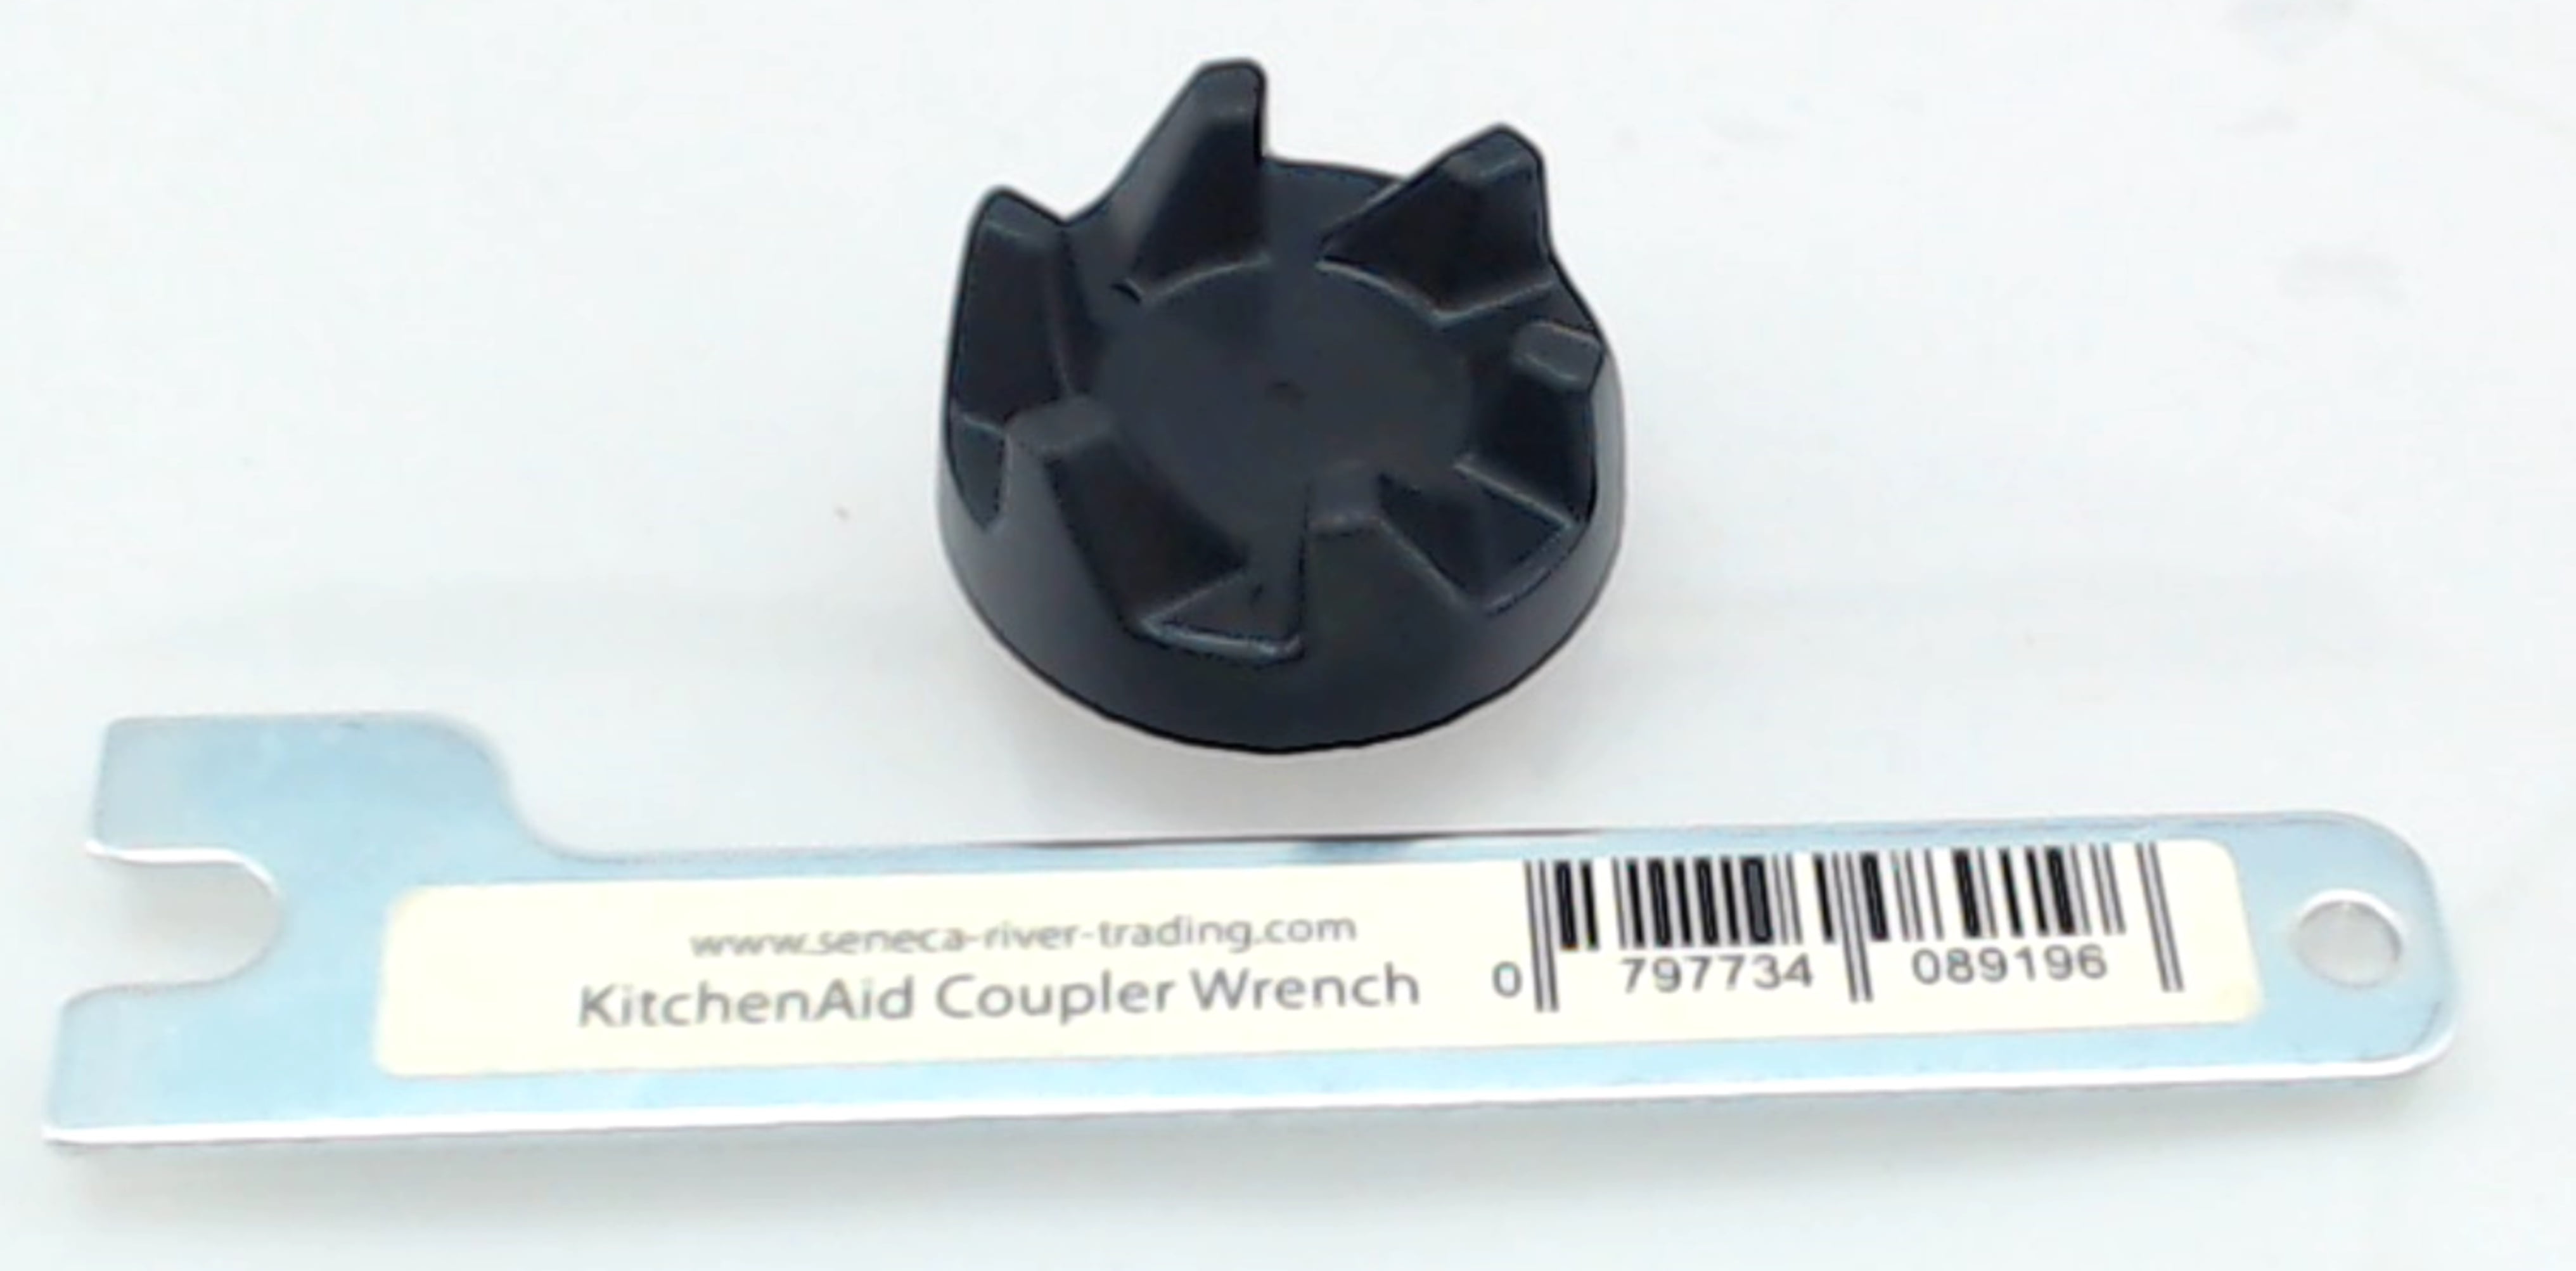 Drive Coupling Coupler Removal Tool Spanner For KitchenAid 9704230 Blender 2Pcs 